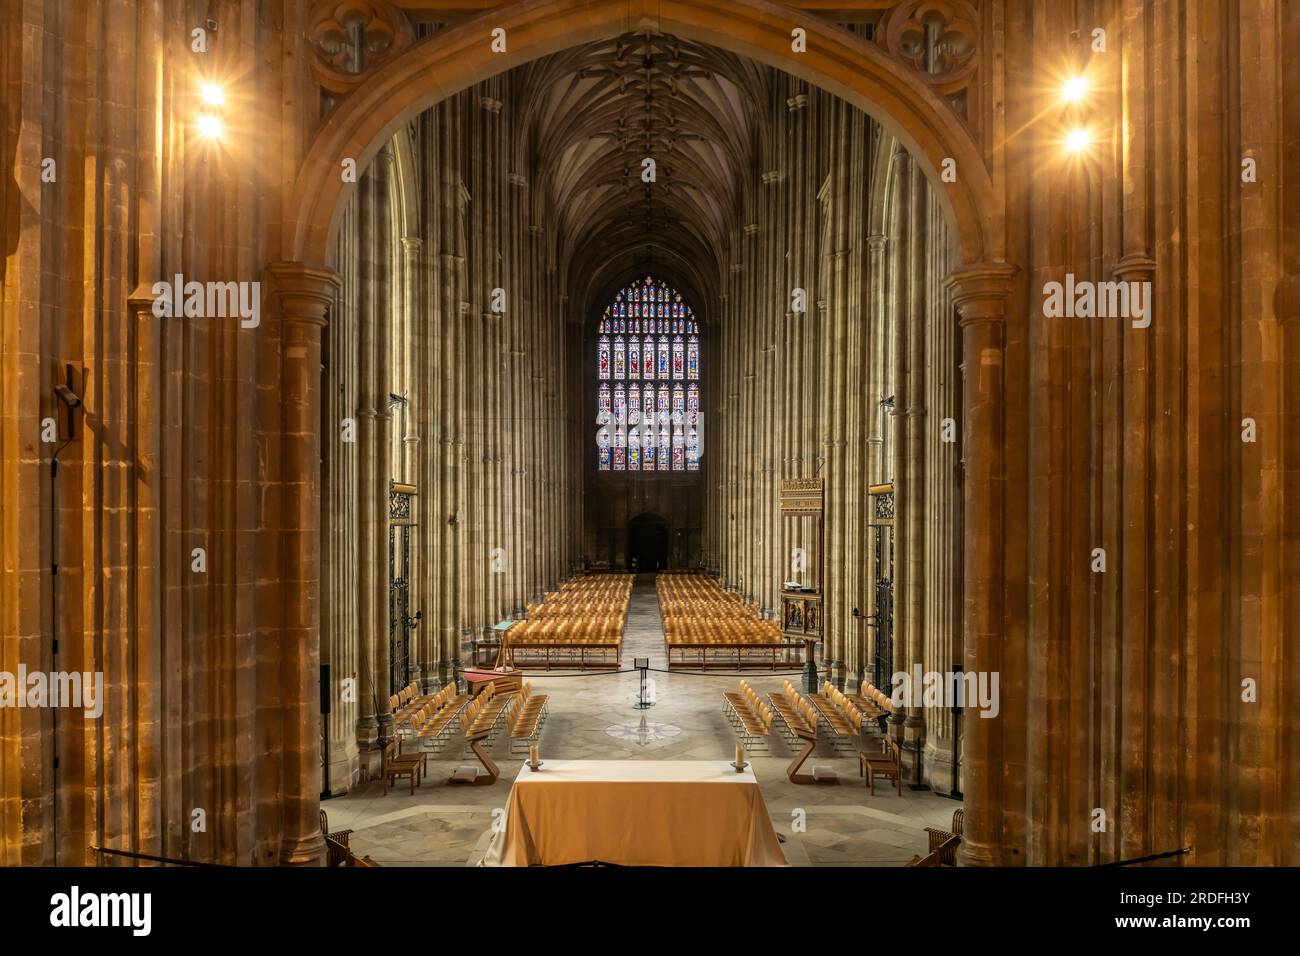 Kirchenschiff der Kathedrale von Canterbury, England, Großbritannien, Europa | Nave of the Canterbury Cathedral, England, United Kingdom of Great Br Stockfoto